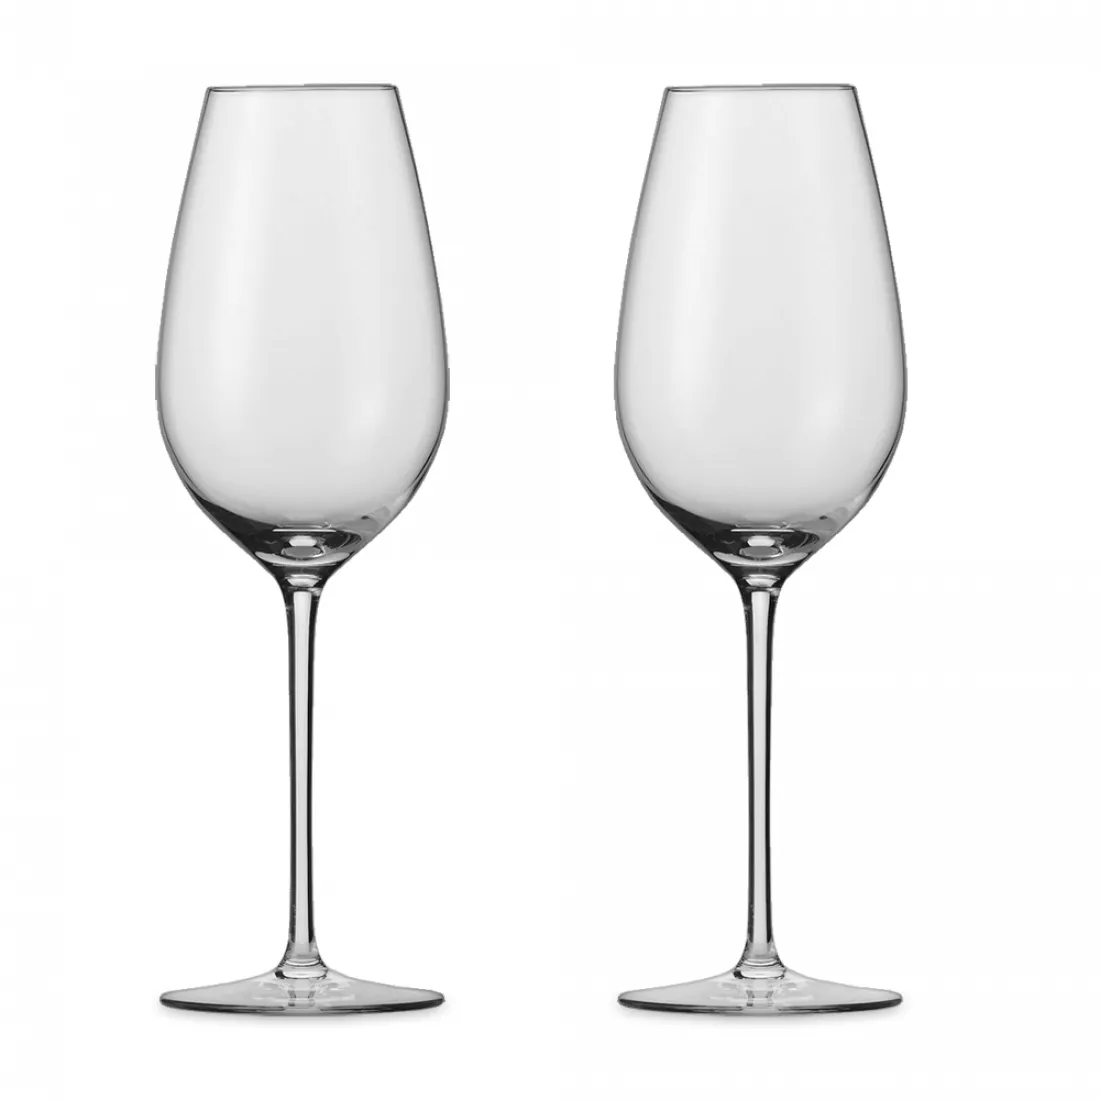 ZWIESEL GLAS Набор бокалов для белого вина SAUVIGNON BLANC, ручная работа, объем 364 мл, 2 шт., серия Enoteca